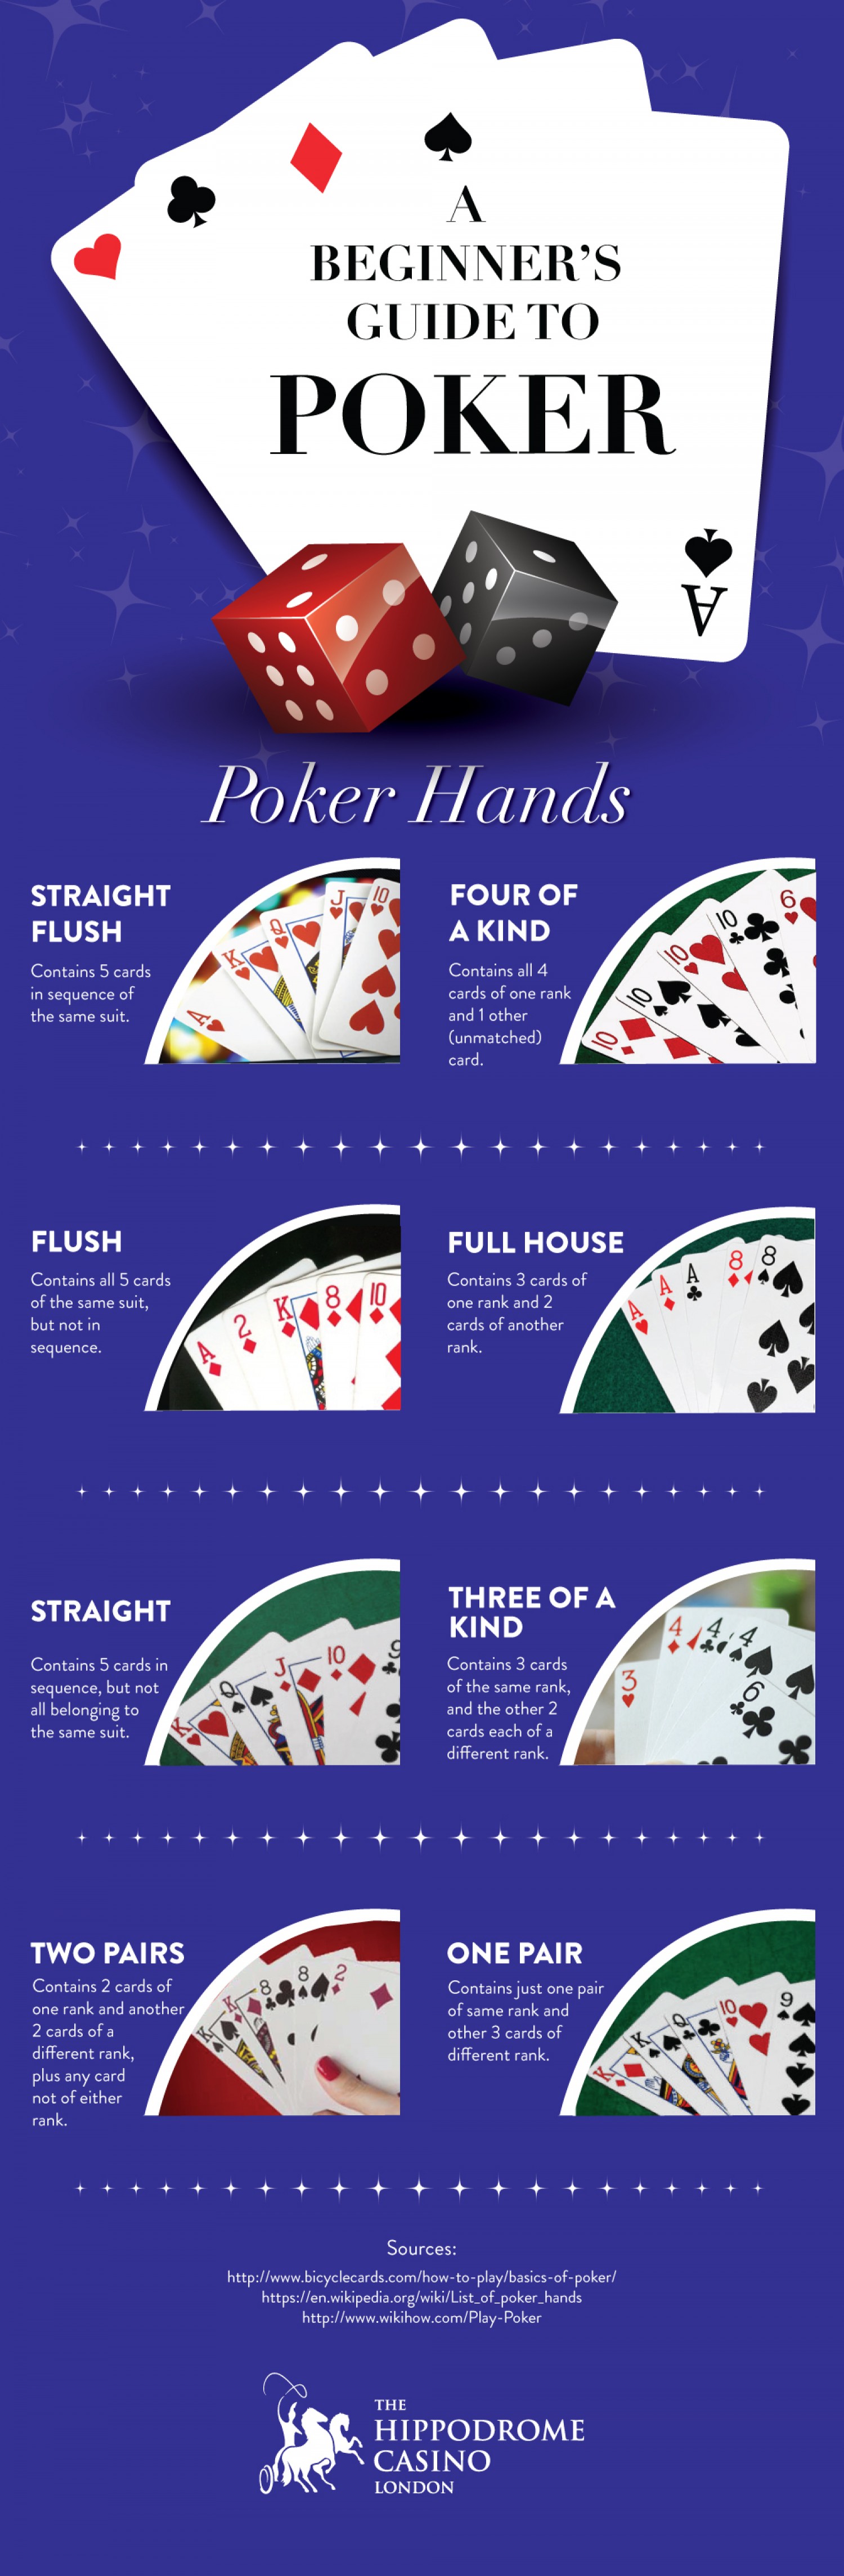 a-beginners-guide-to-poker--hippodrome-casino-london_55fd1295843c9_w1500.jpg